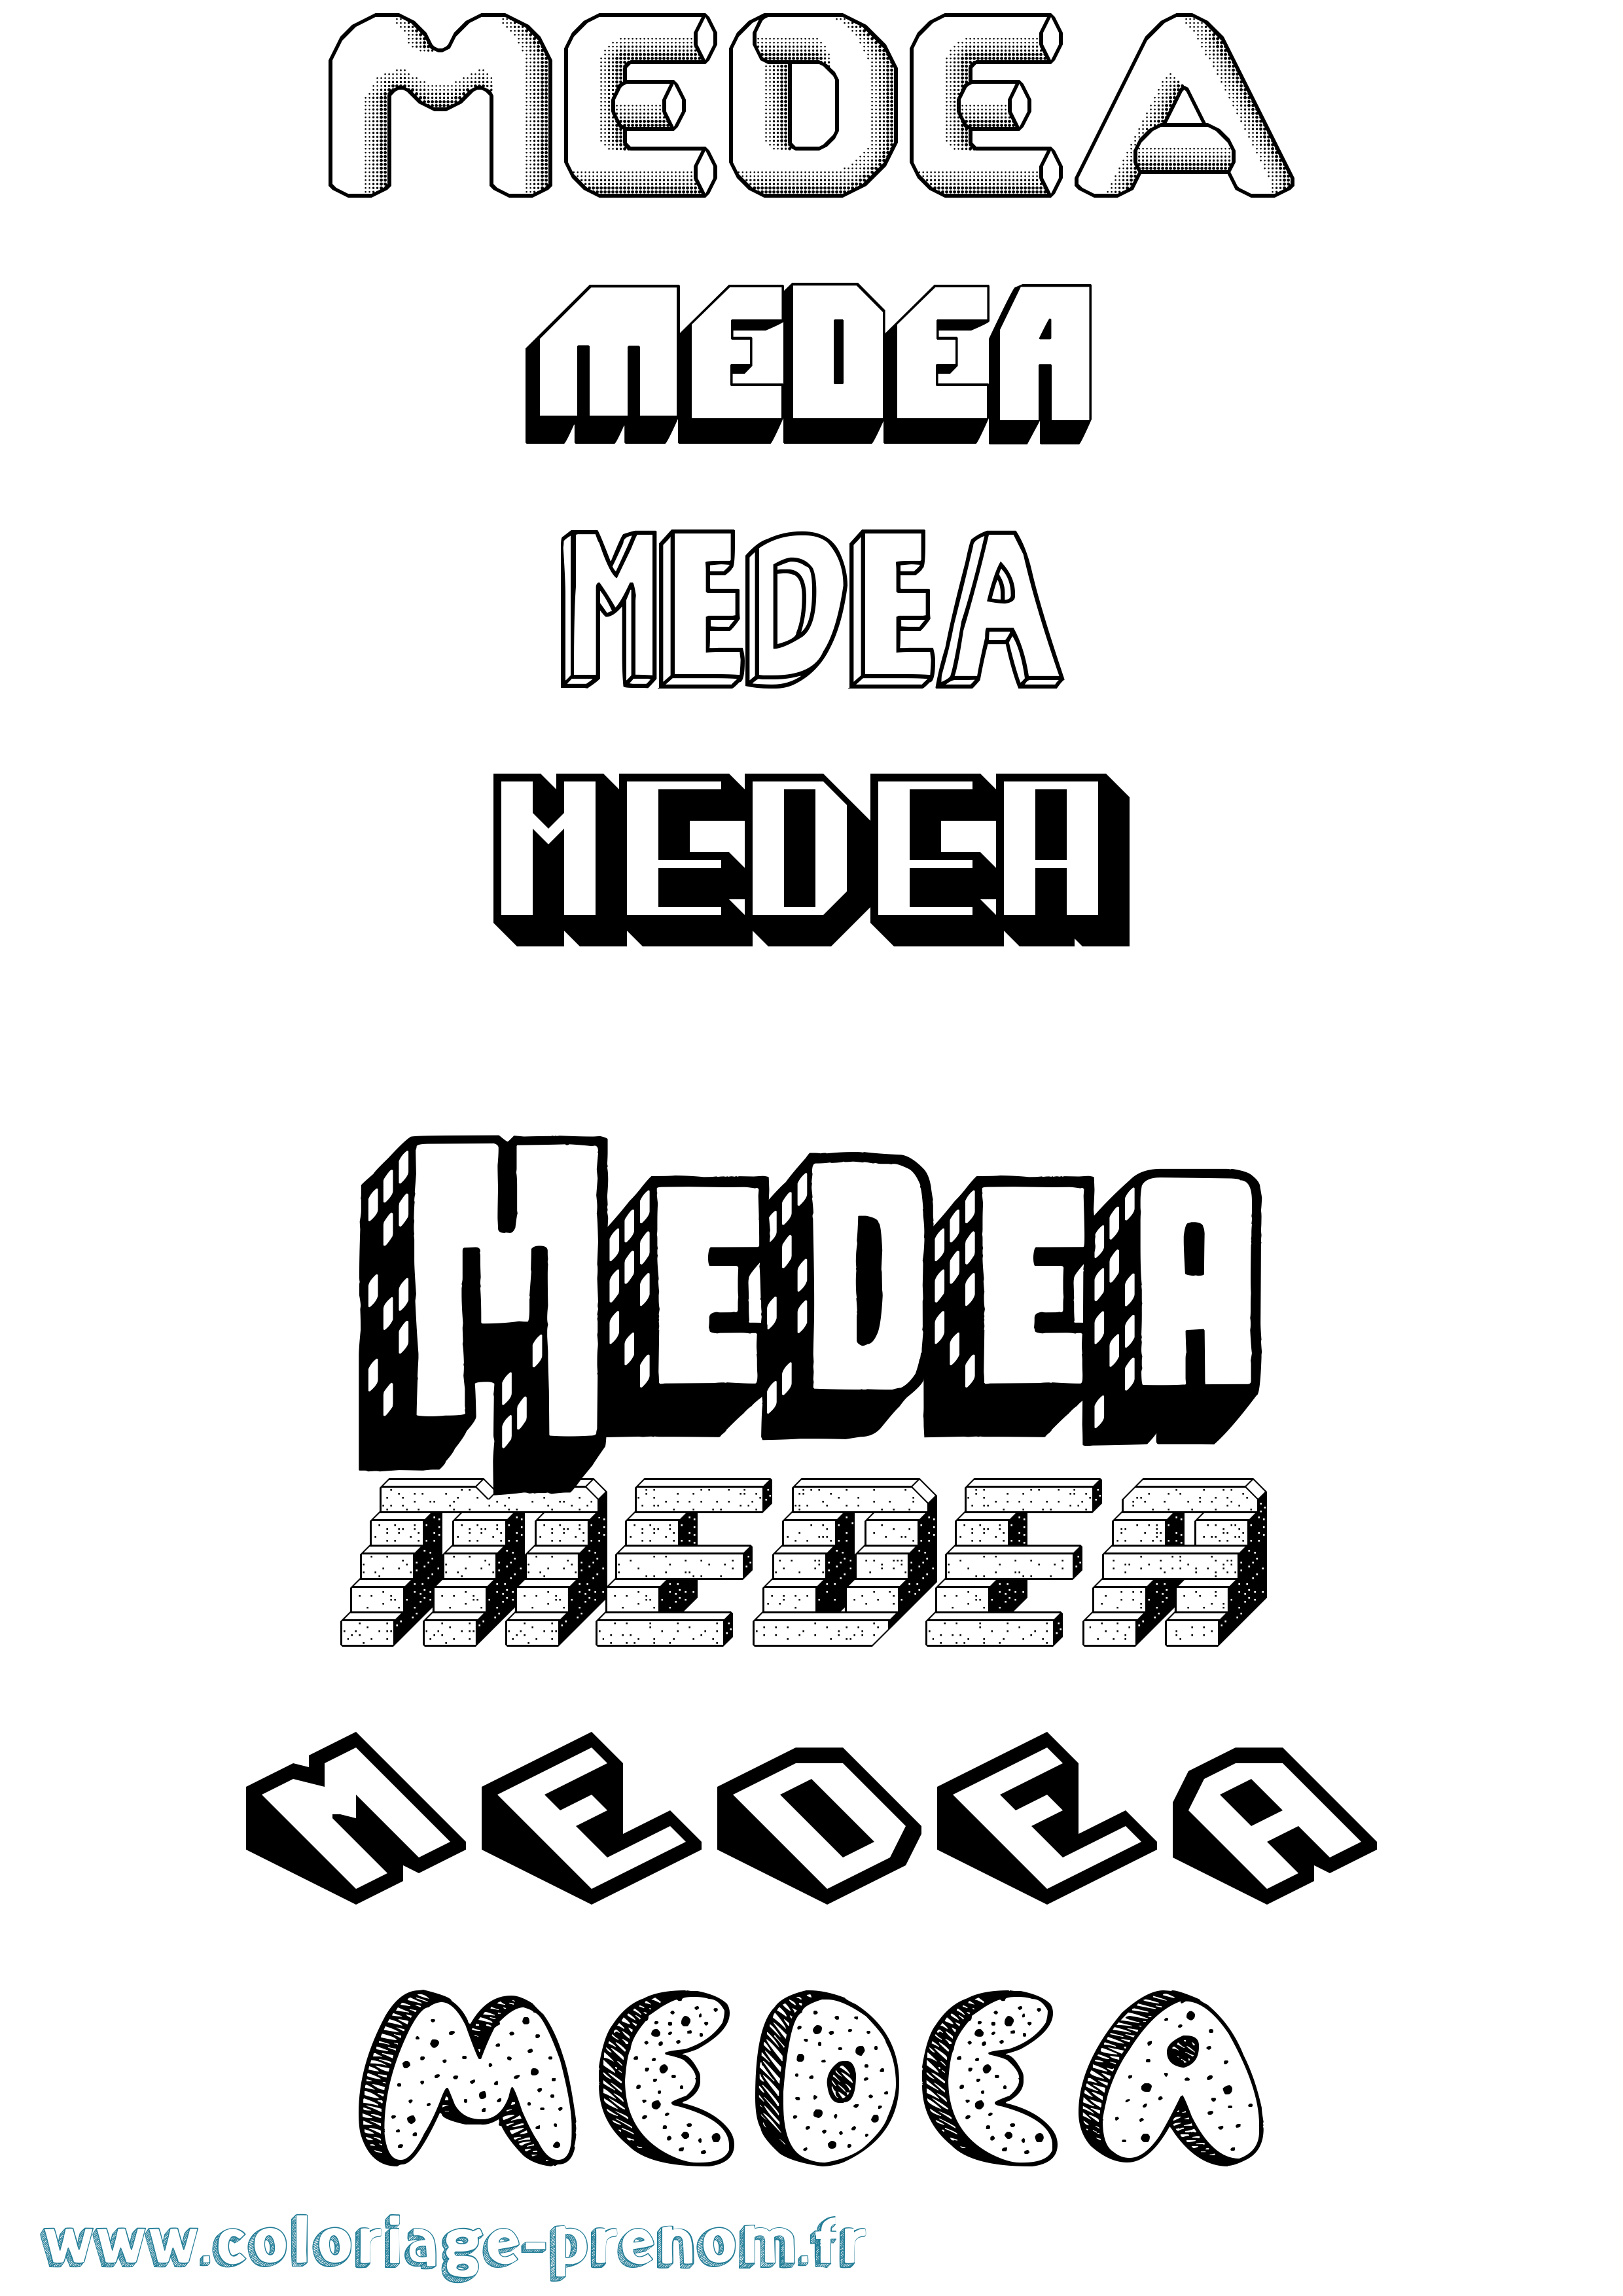 Coloriage prénom Medea Effet 3D